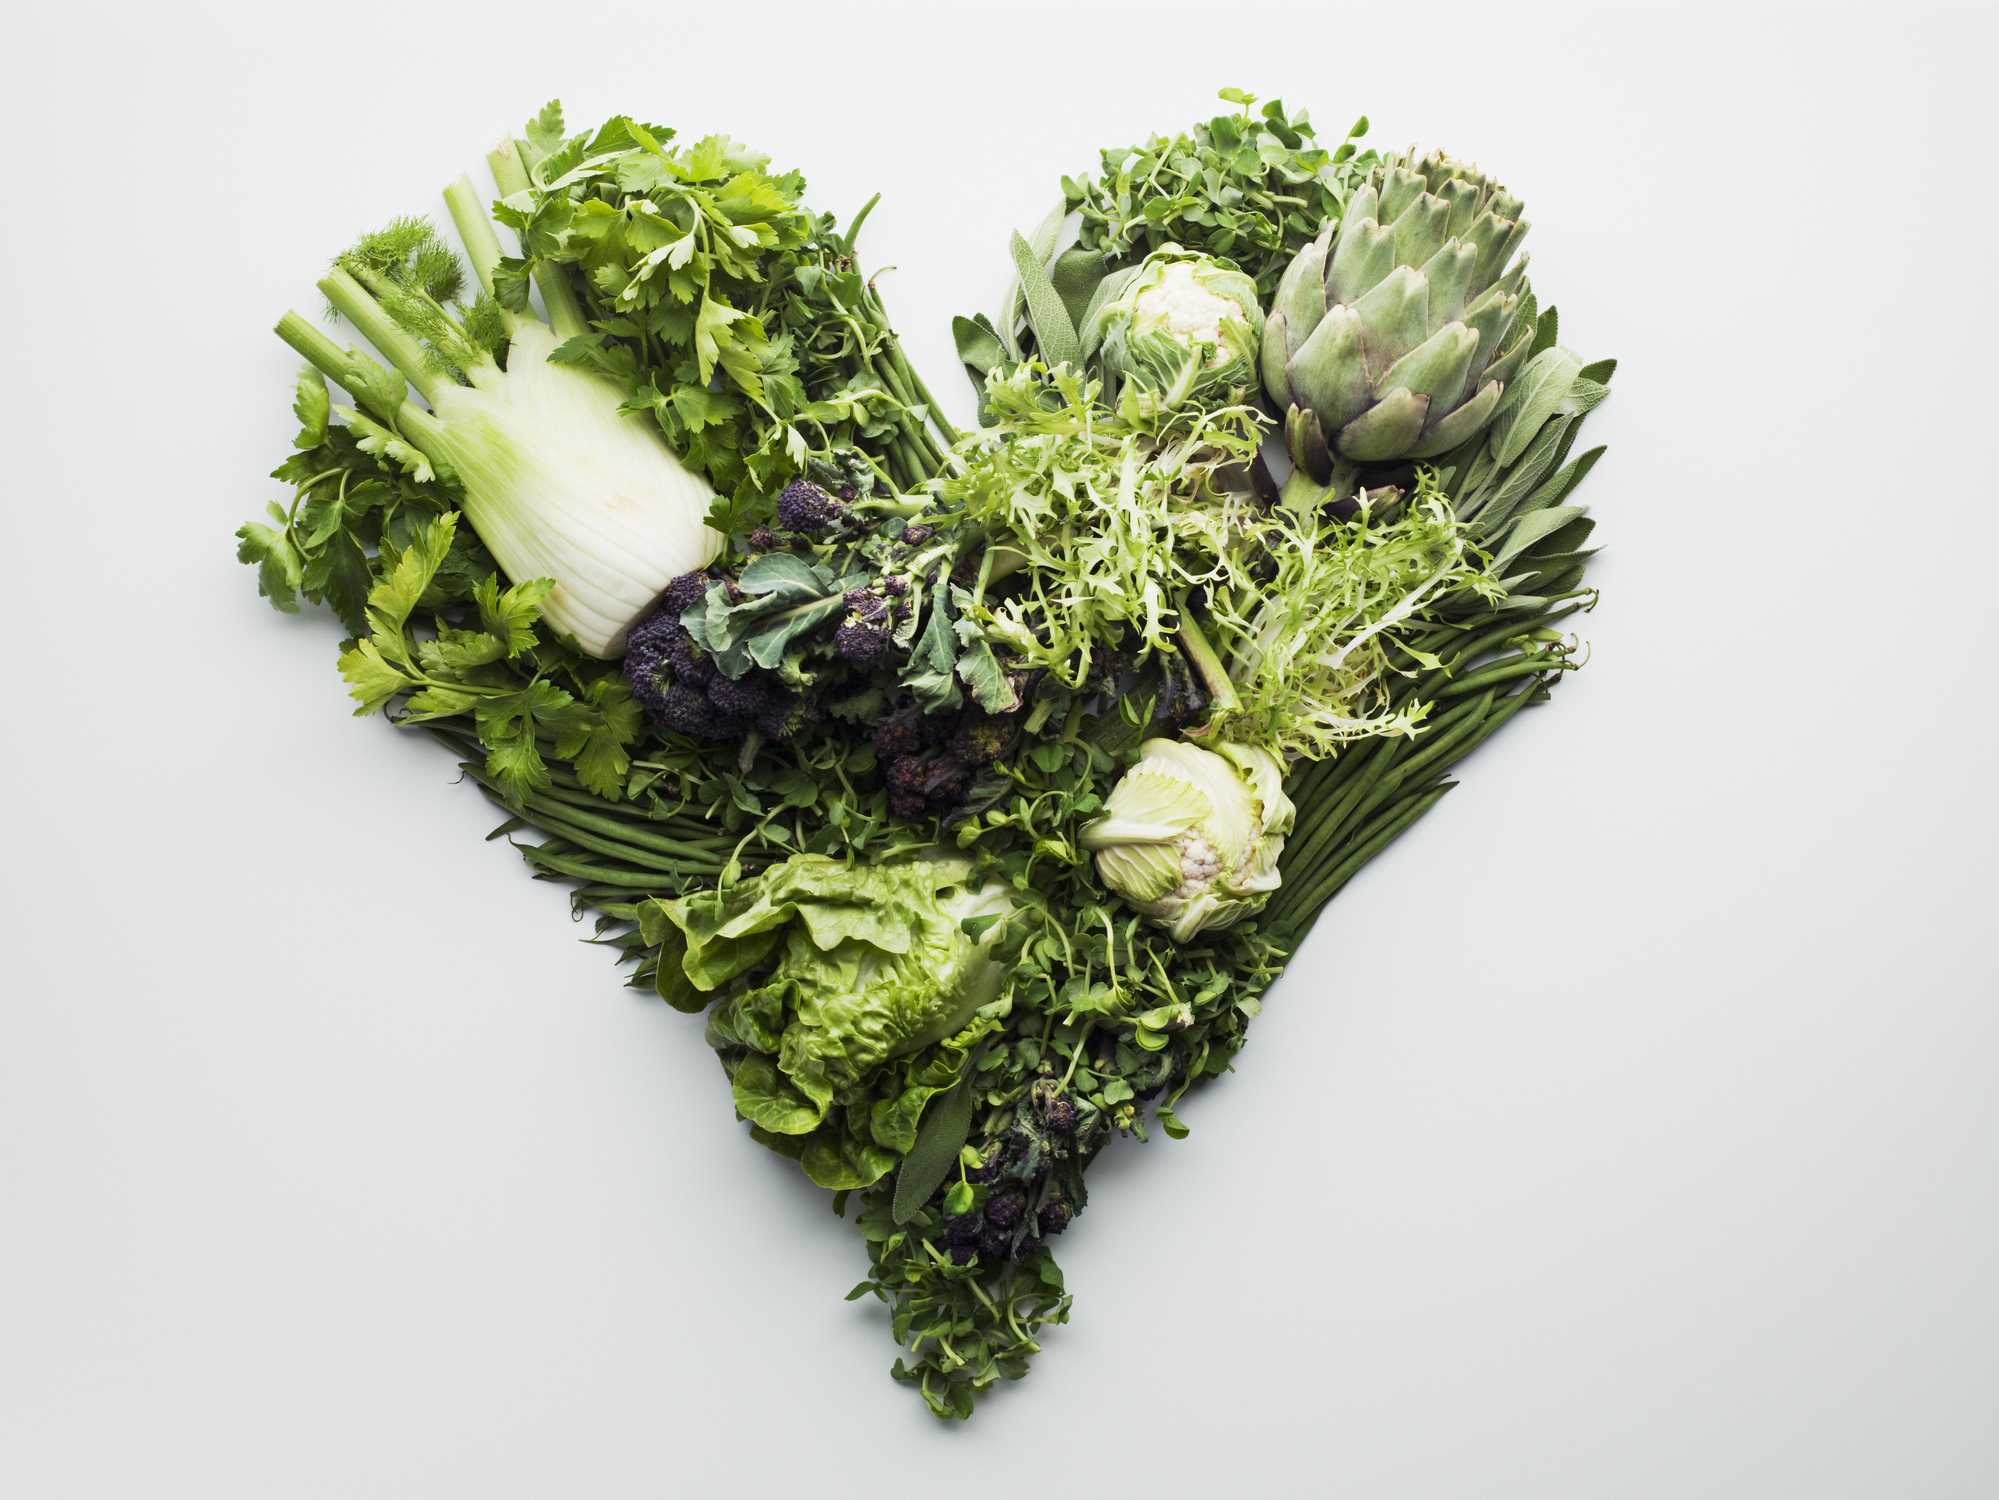 green-vegetables-forming-heart-shapejpg